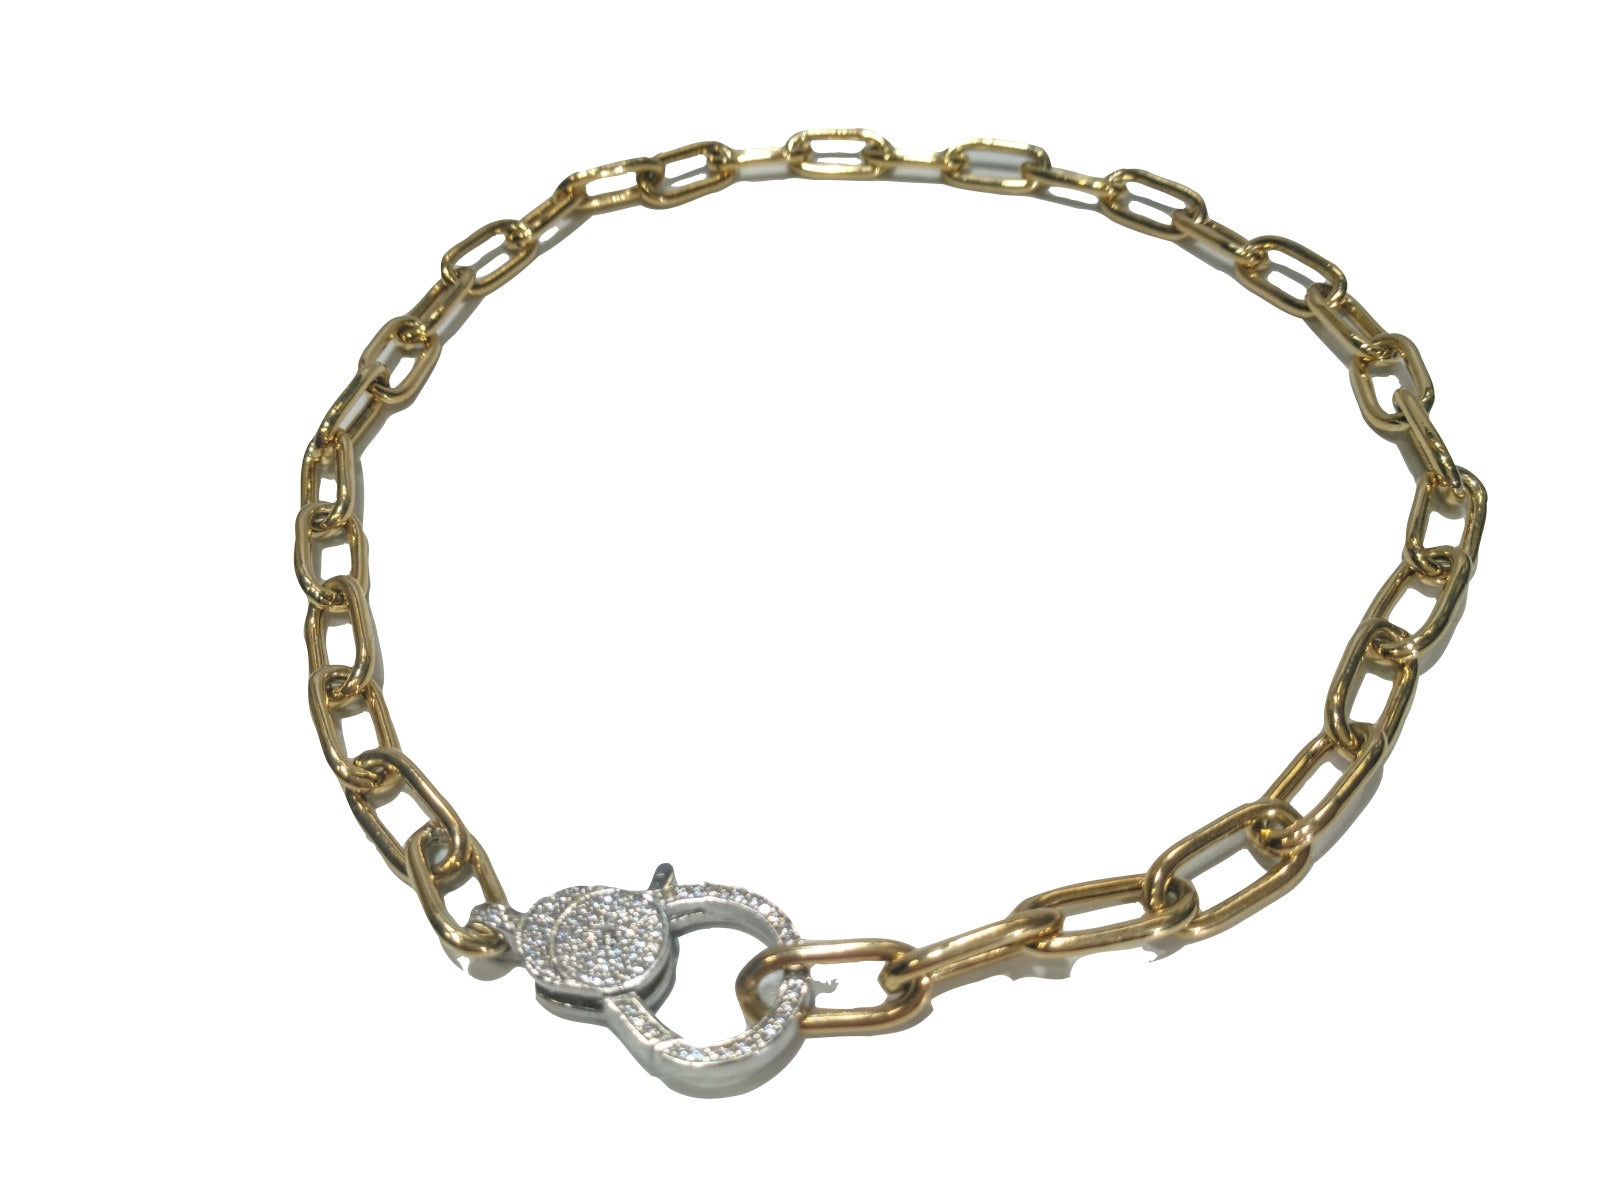 Silver Rolò Chain Necklace with Zirconium stones